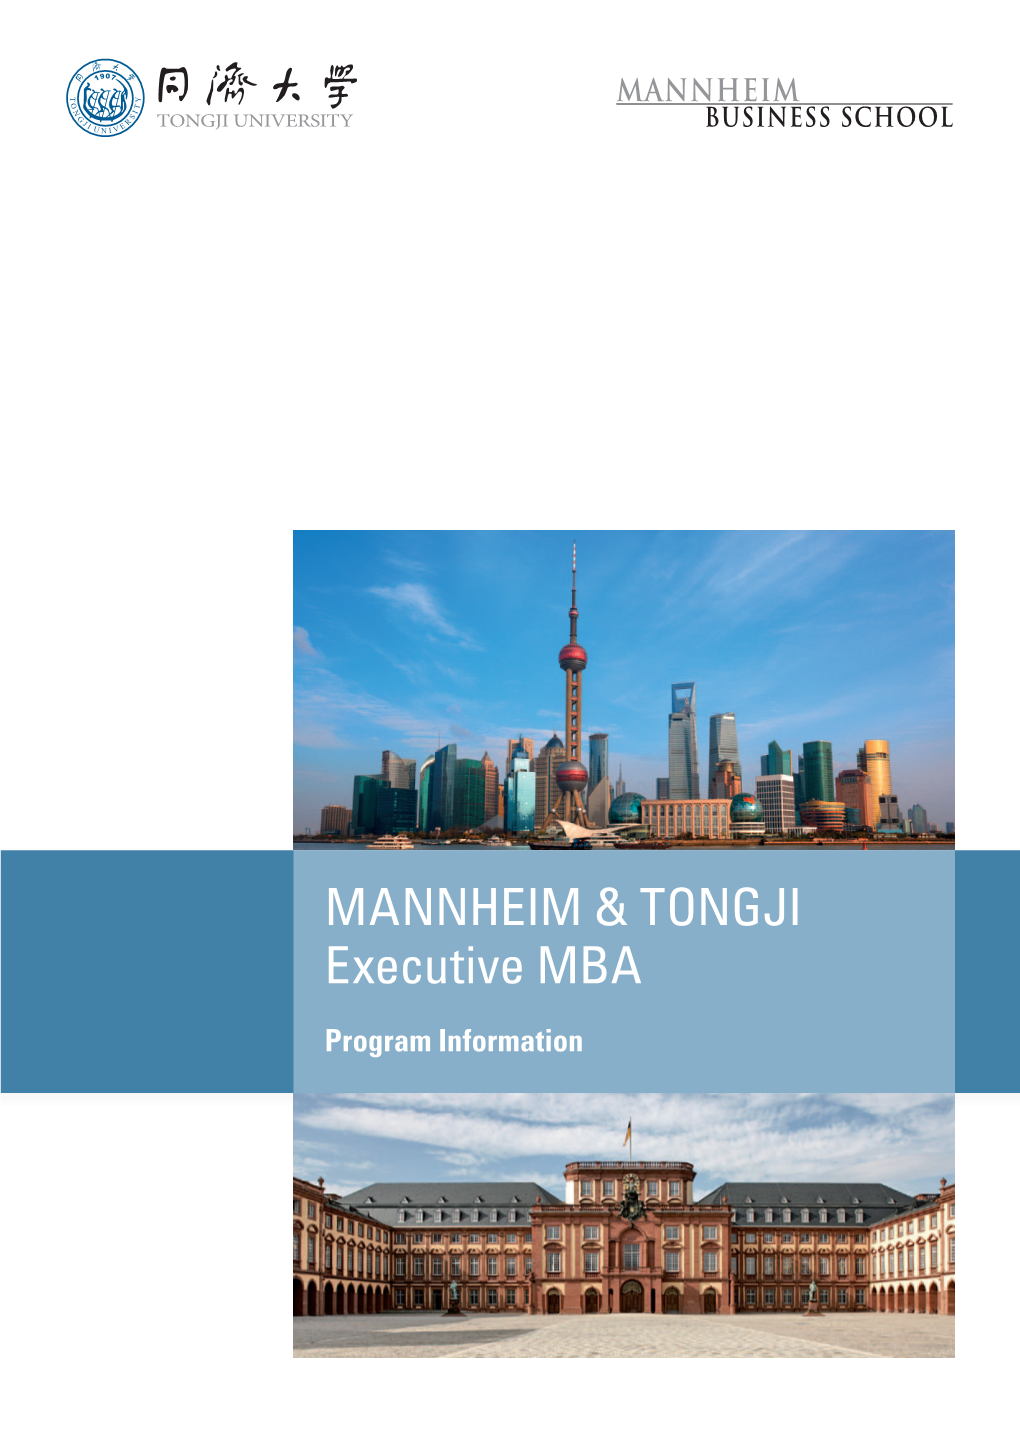 Mannheim & Tongji Executive